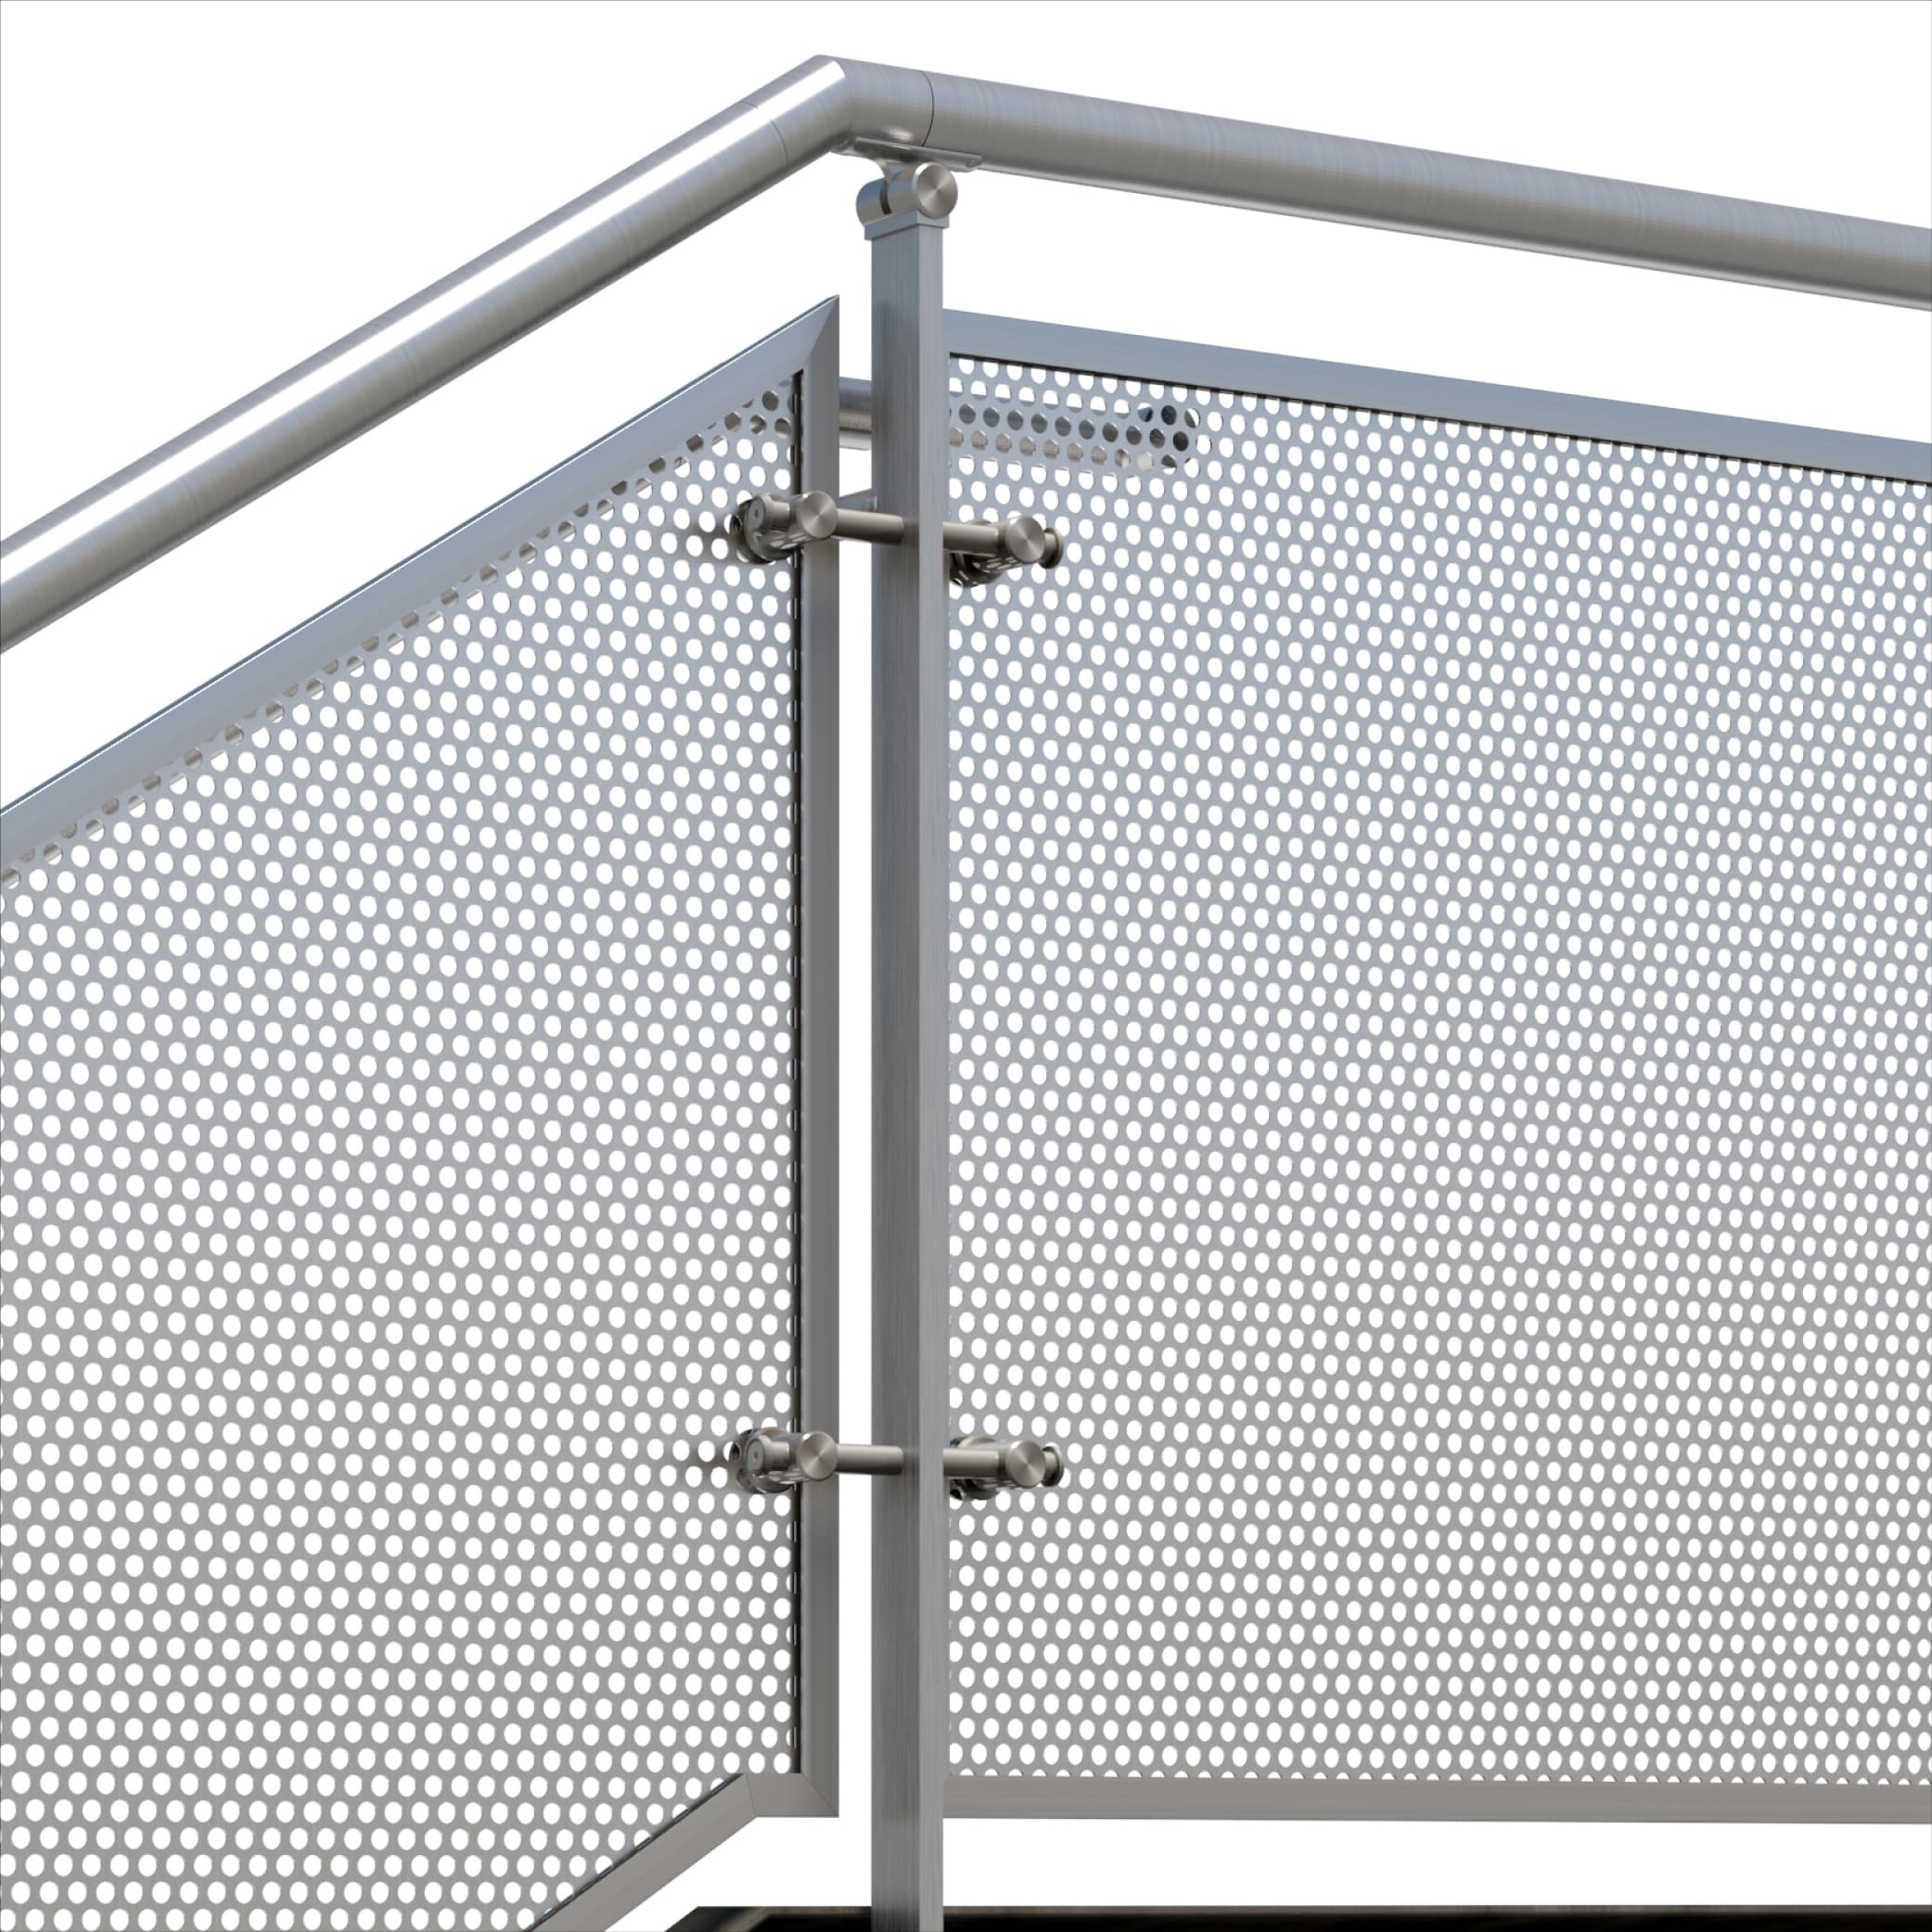 Beacon perf metal railing system